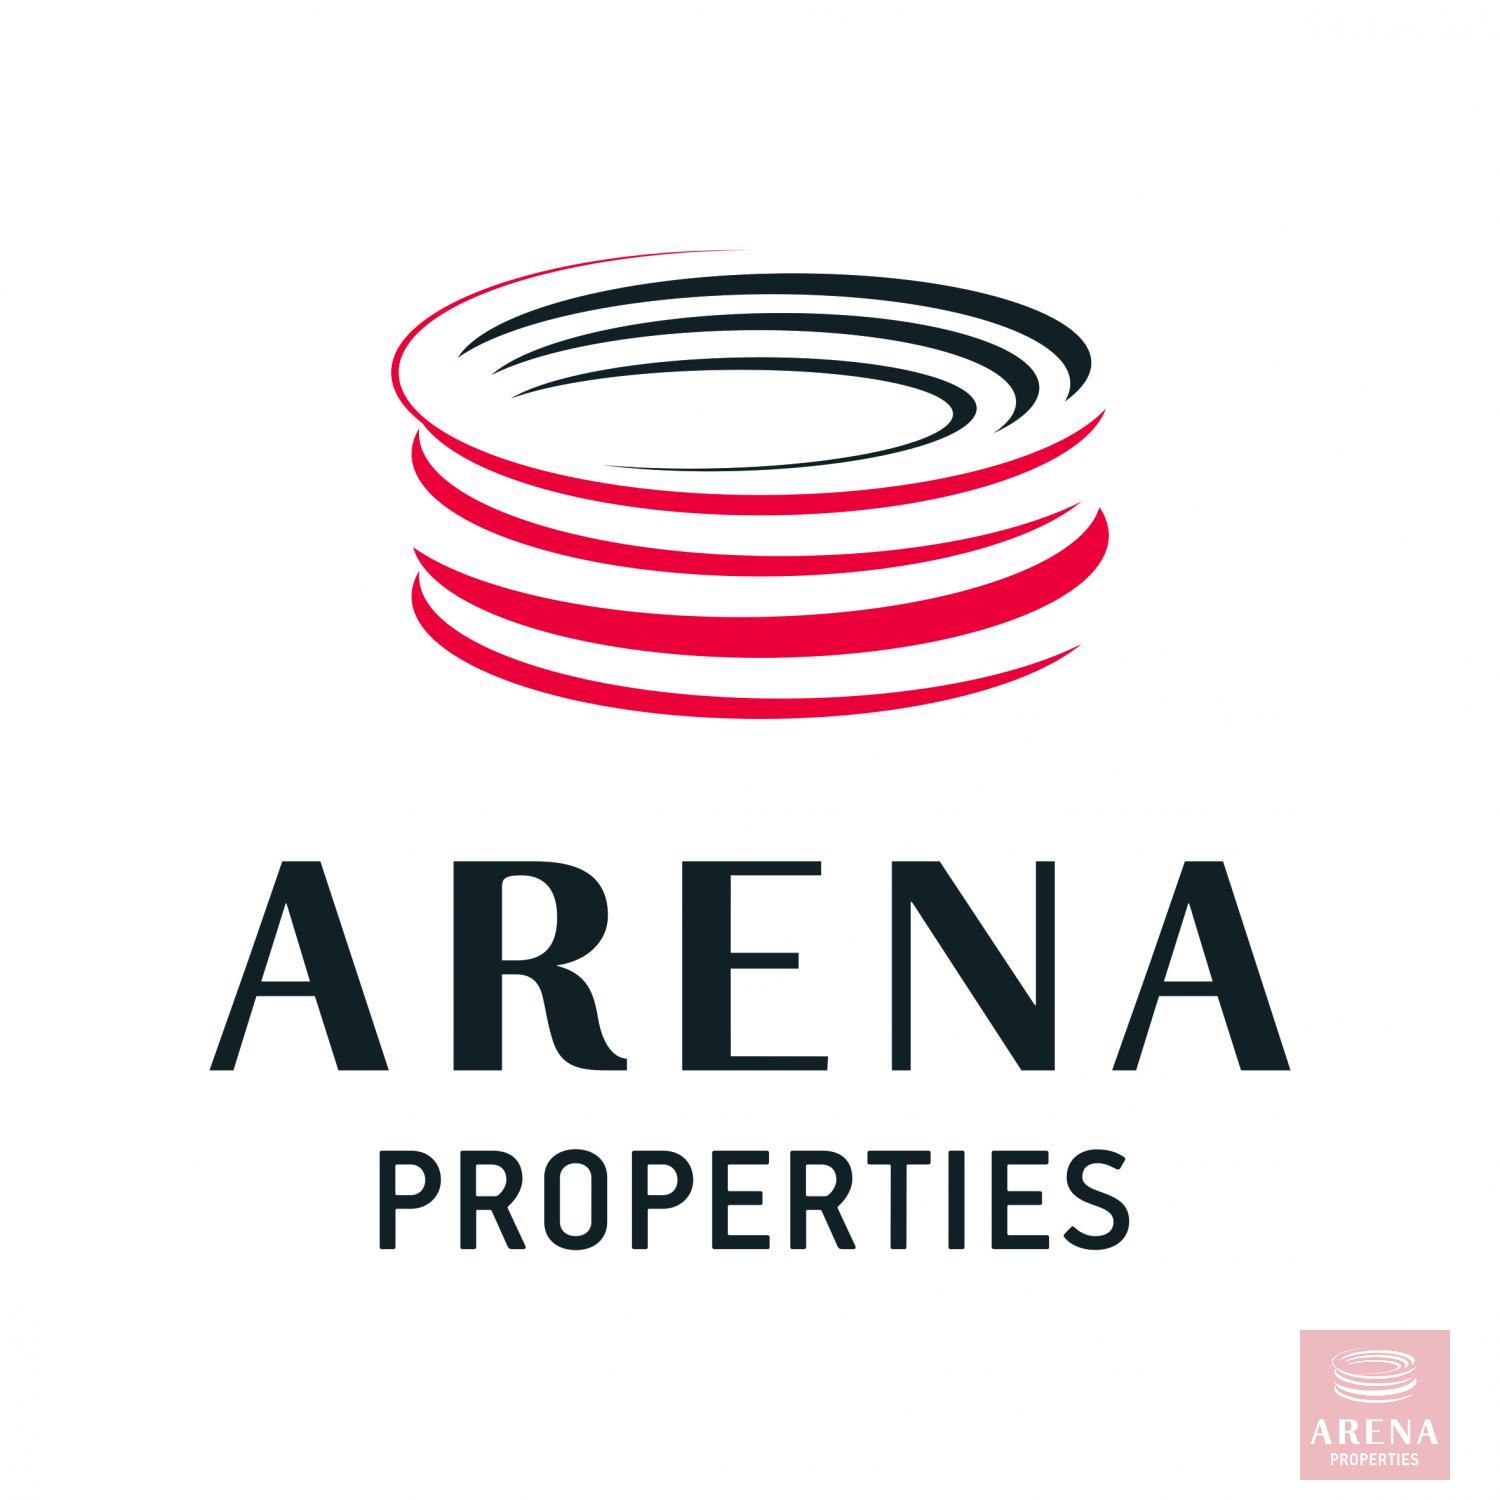 arena properties logo white 1